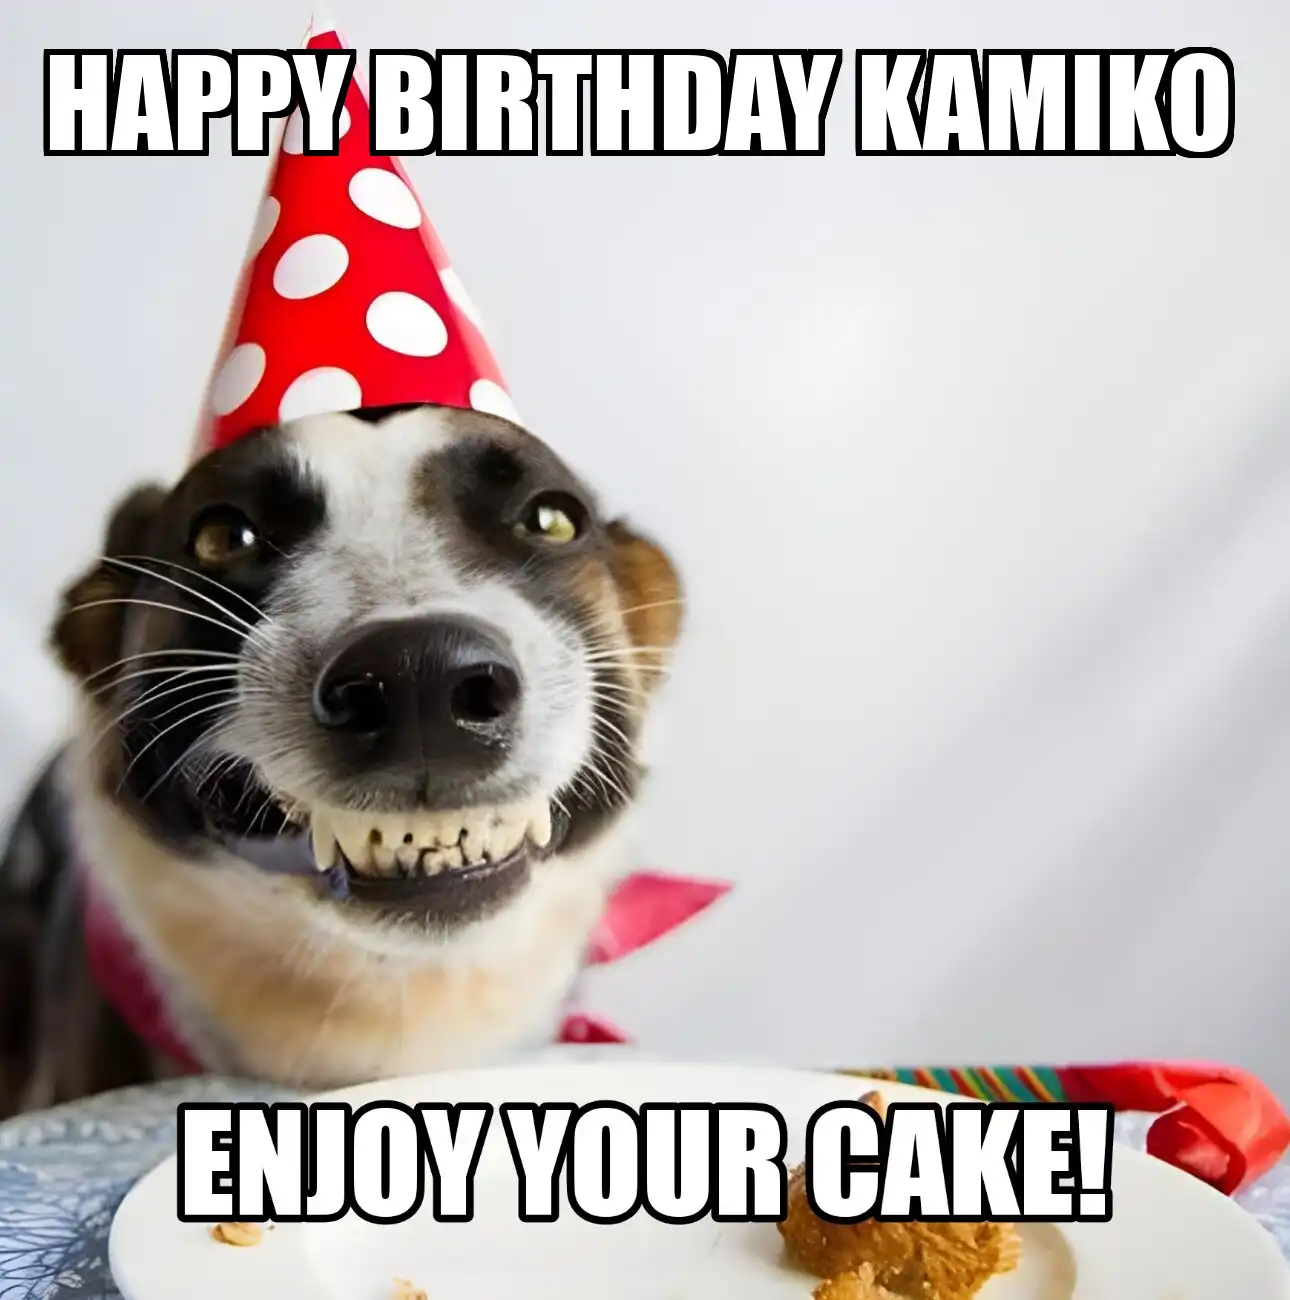 Happy Birthday Kamiko Enjoy Your Cake Dog Meme